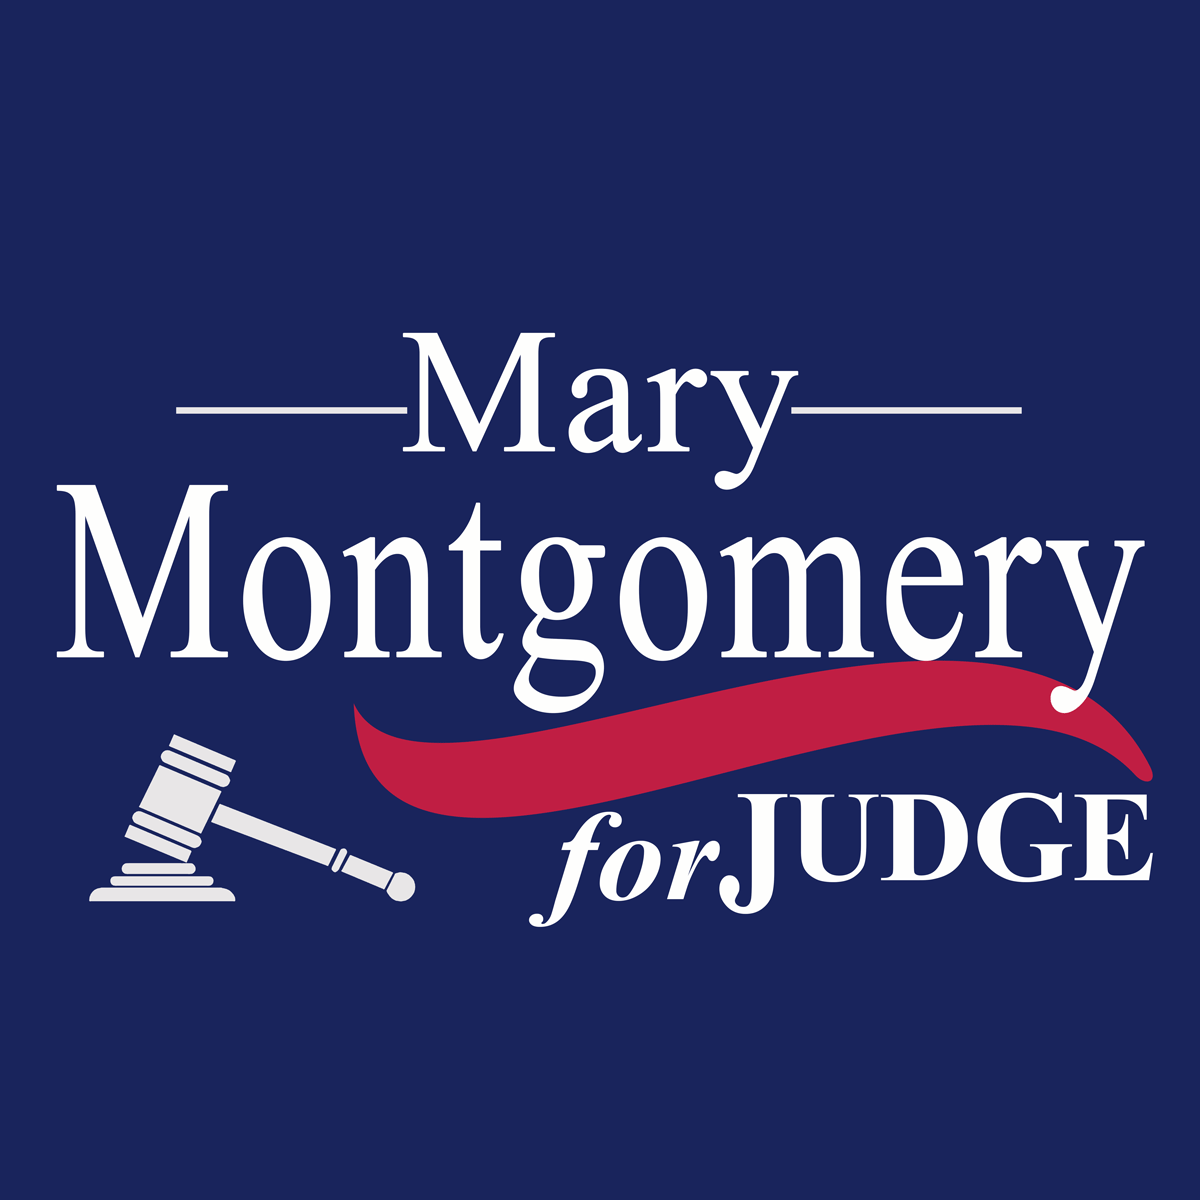 Montgomery Square Logo - $50 Donation. Mary Montgomery for Judge